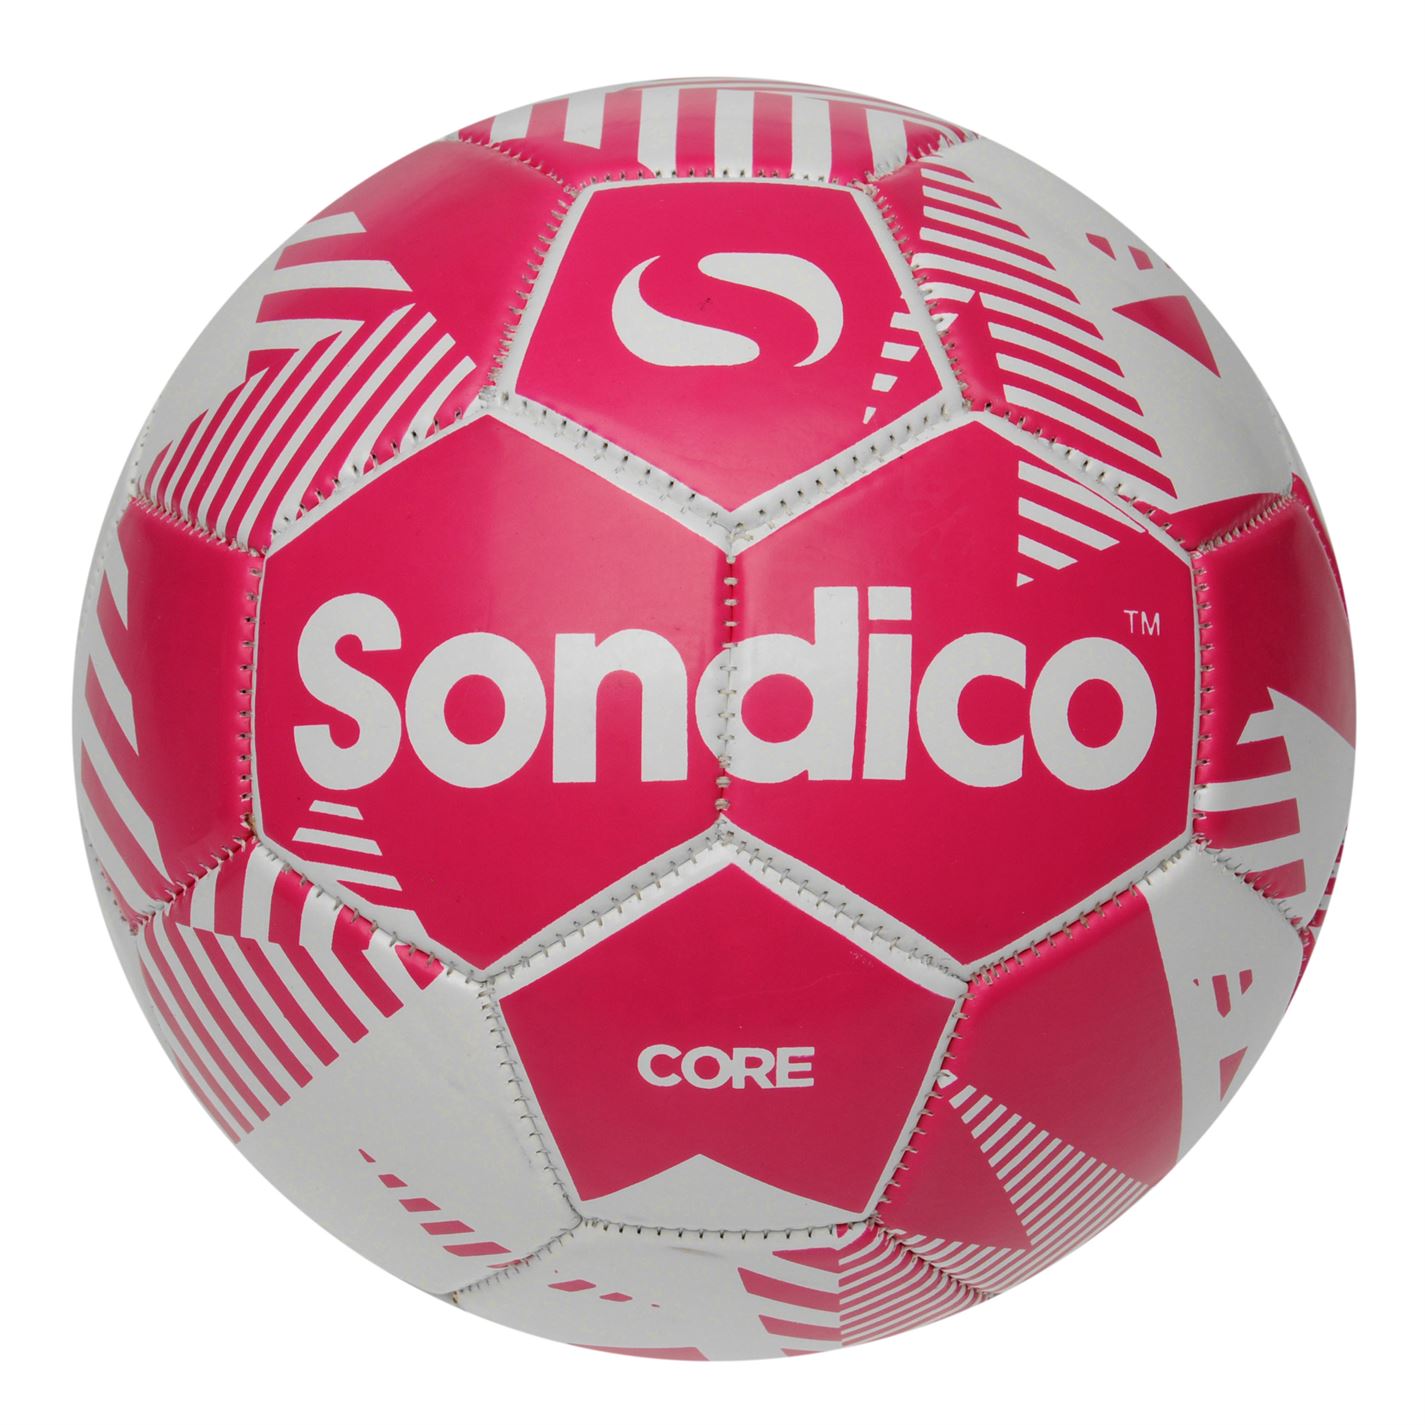 Sondico Core XT Football Soccer Ball 